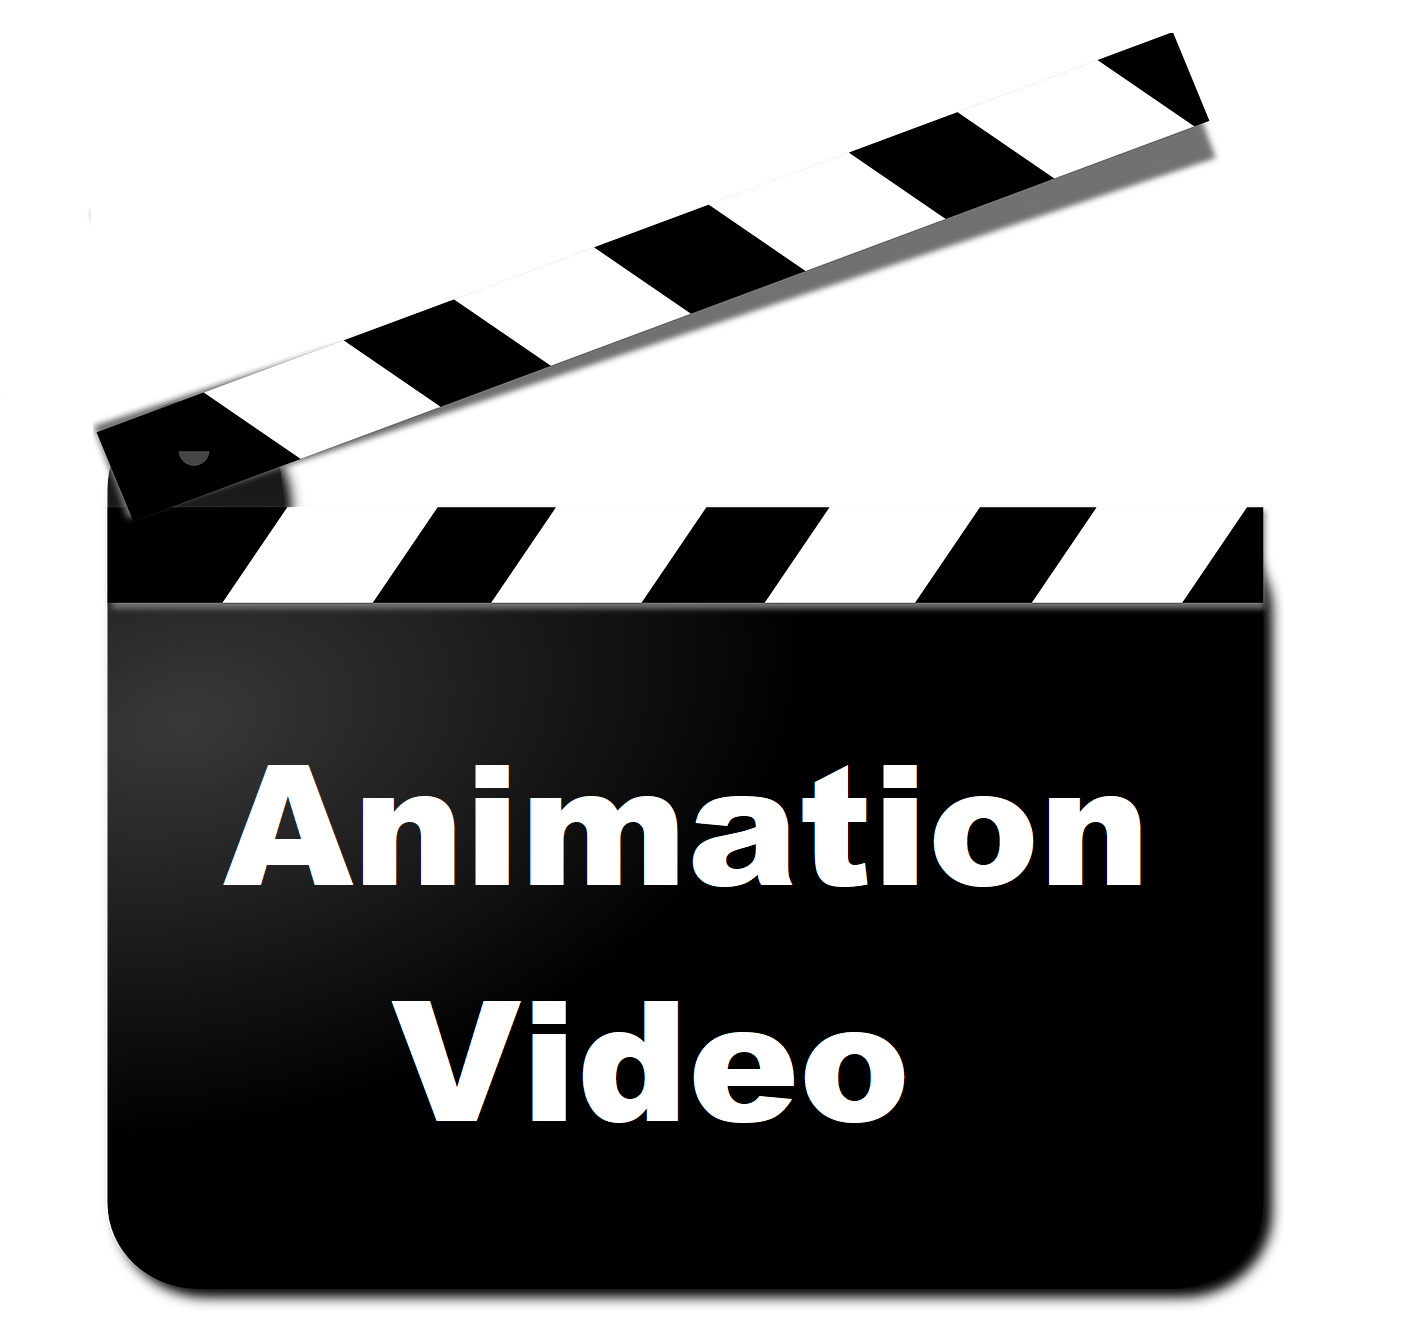 Animation Video